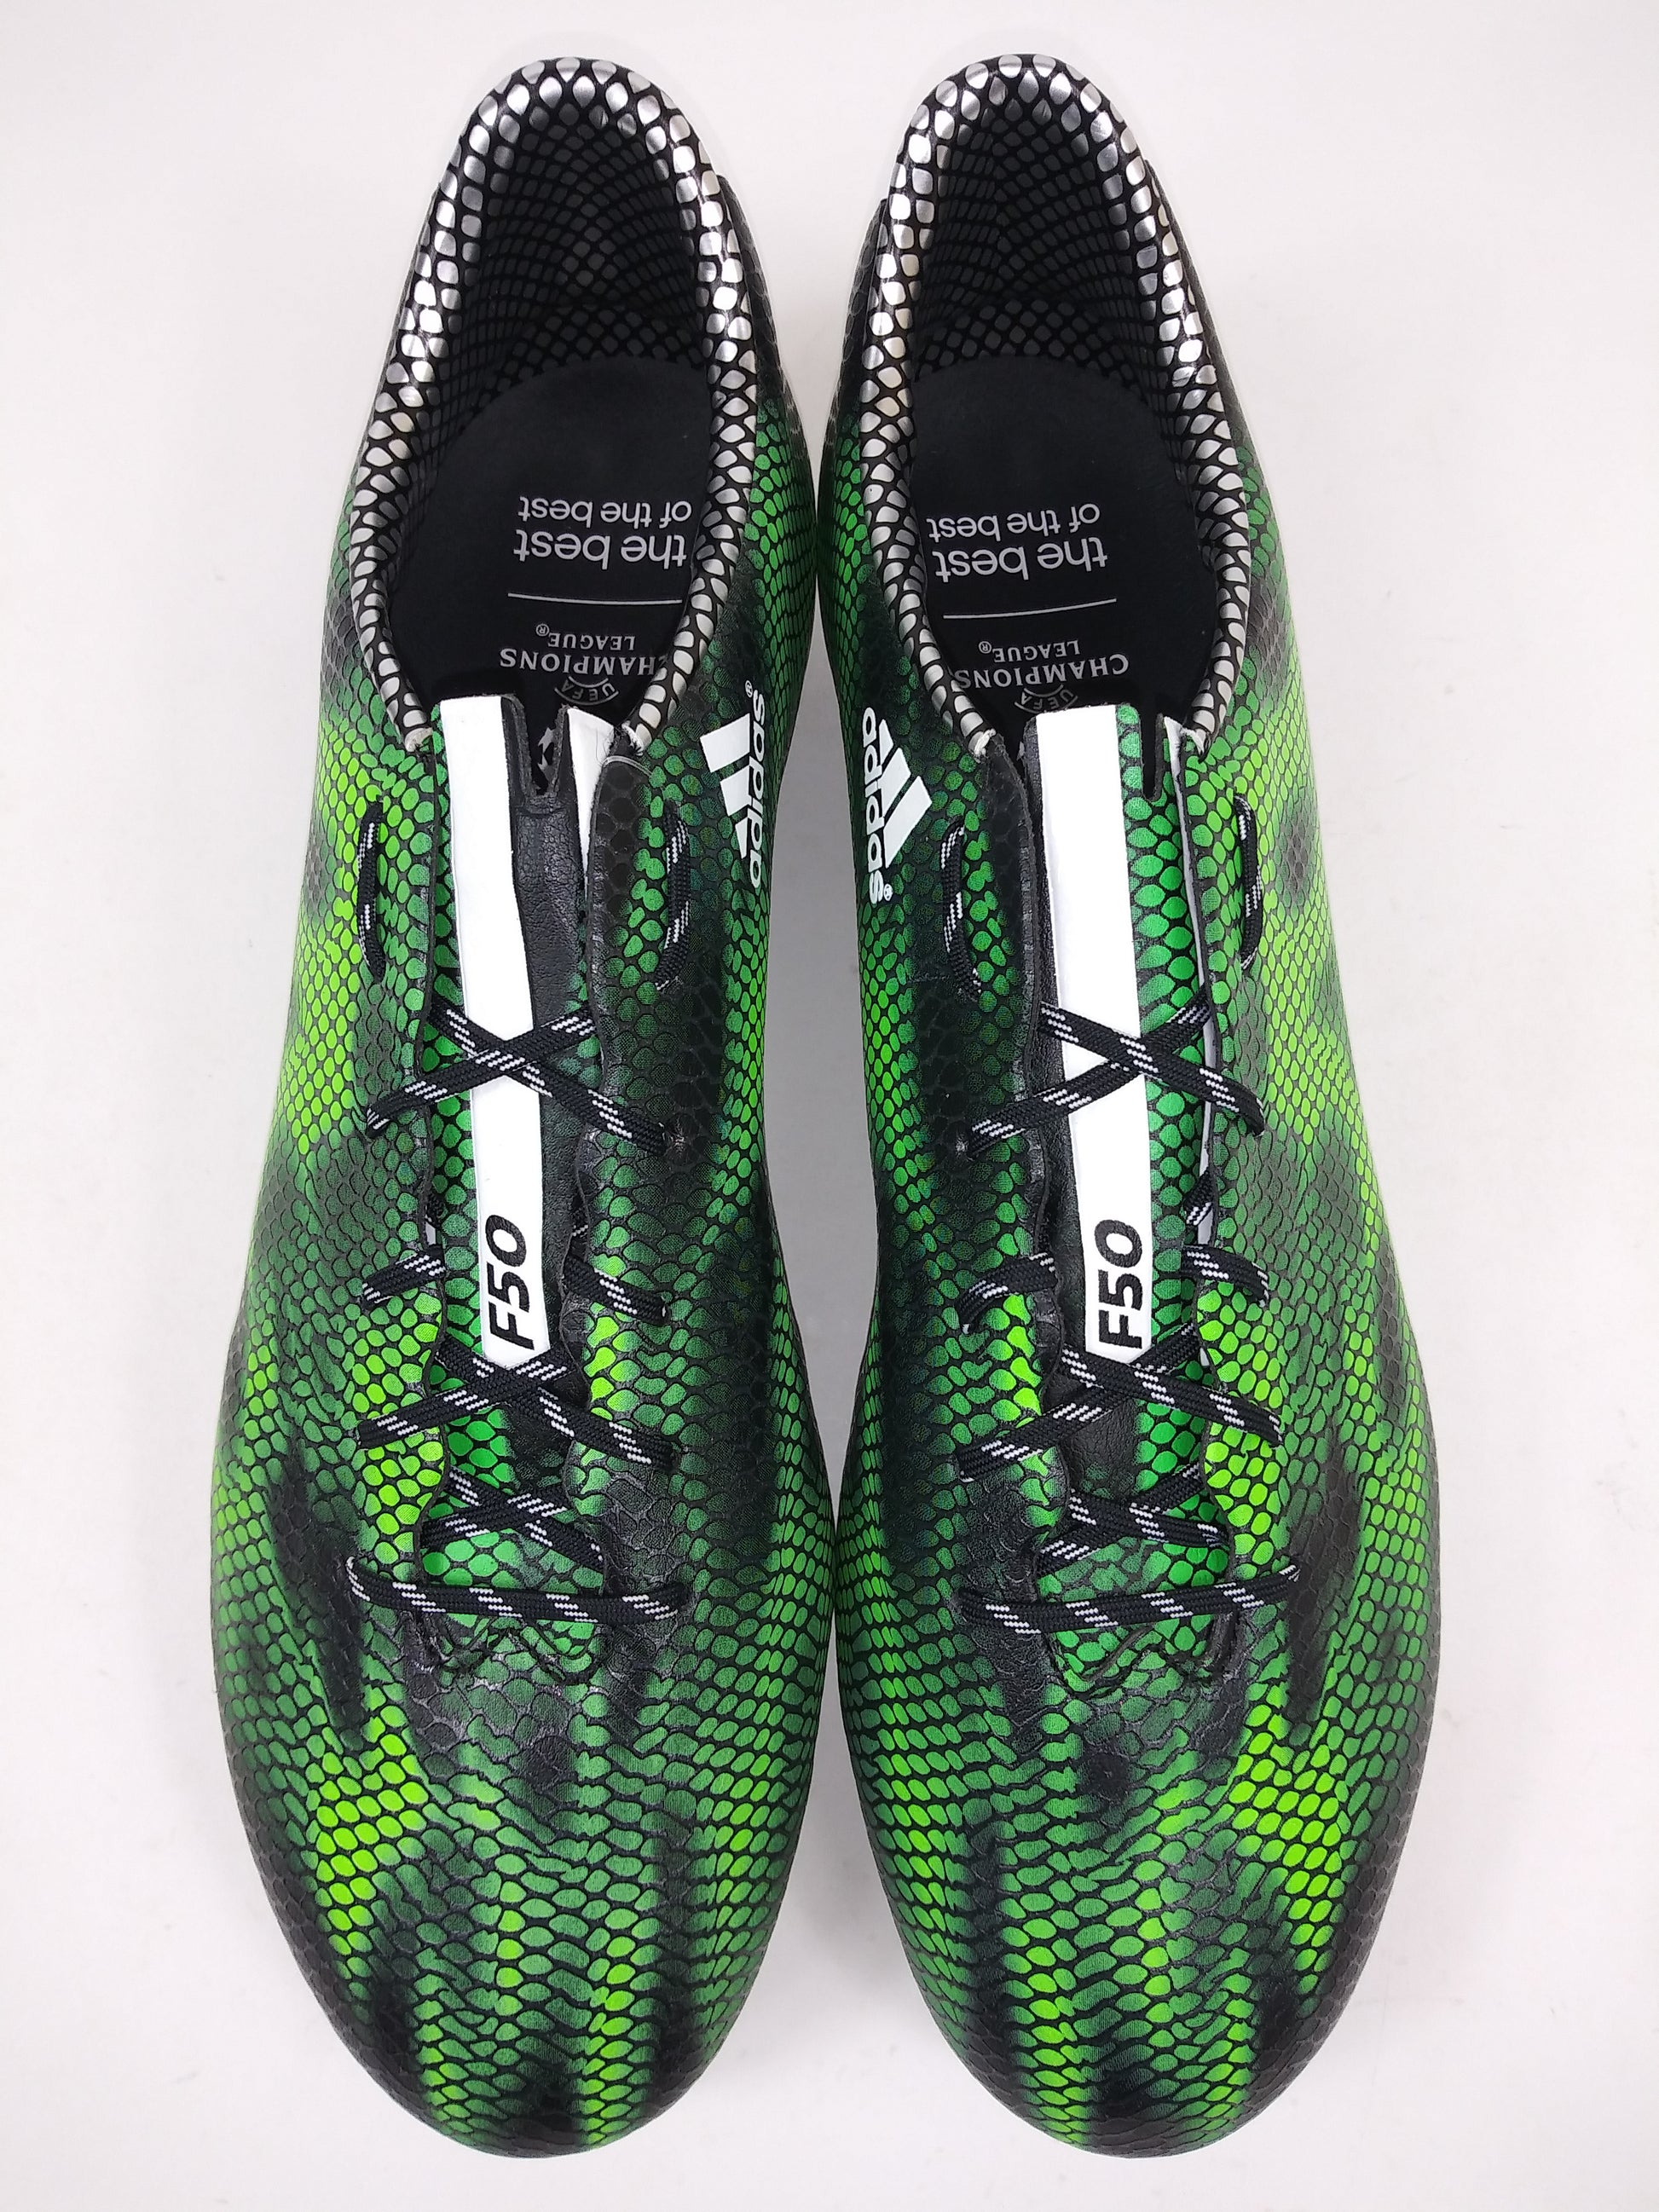 F50 adizero FG Green Black – Villegas Footwear